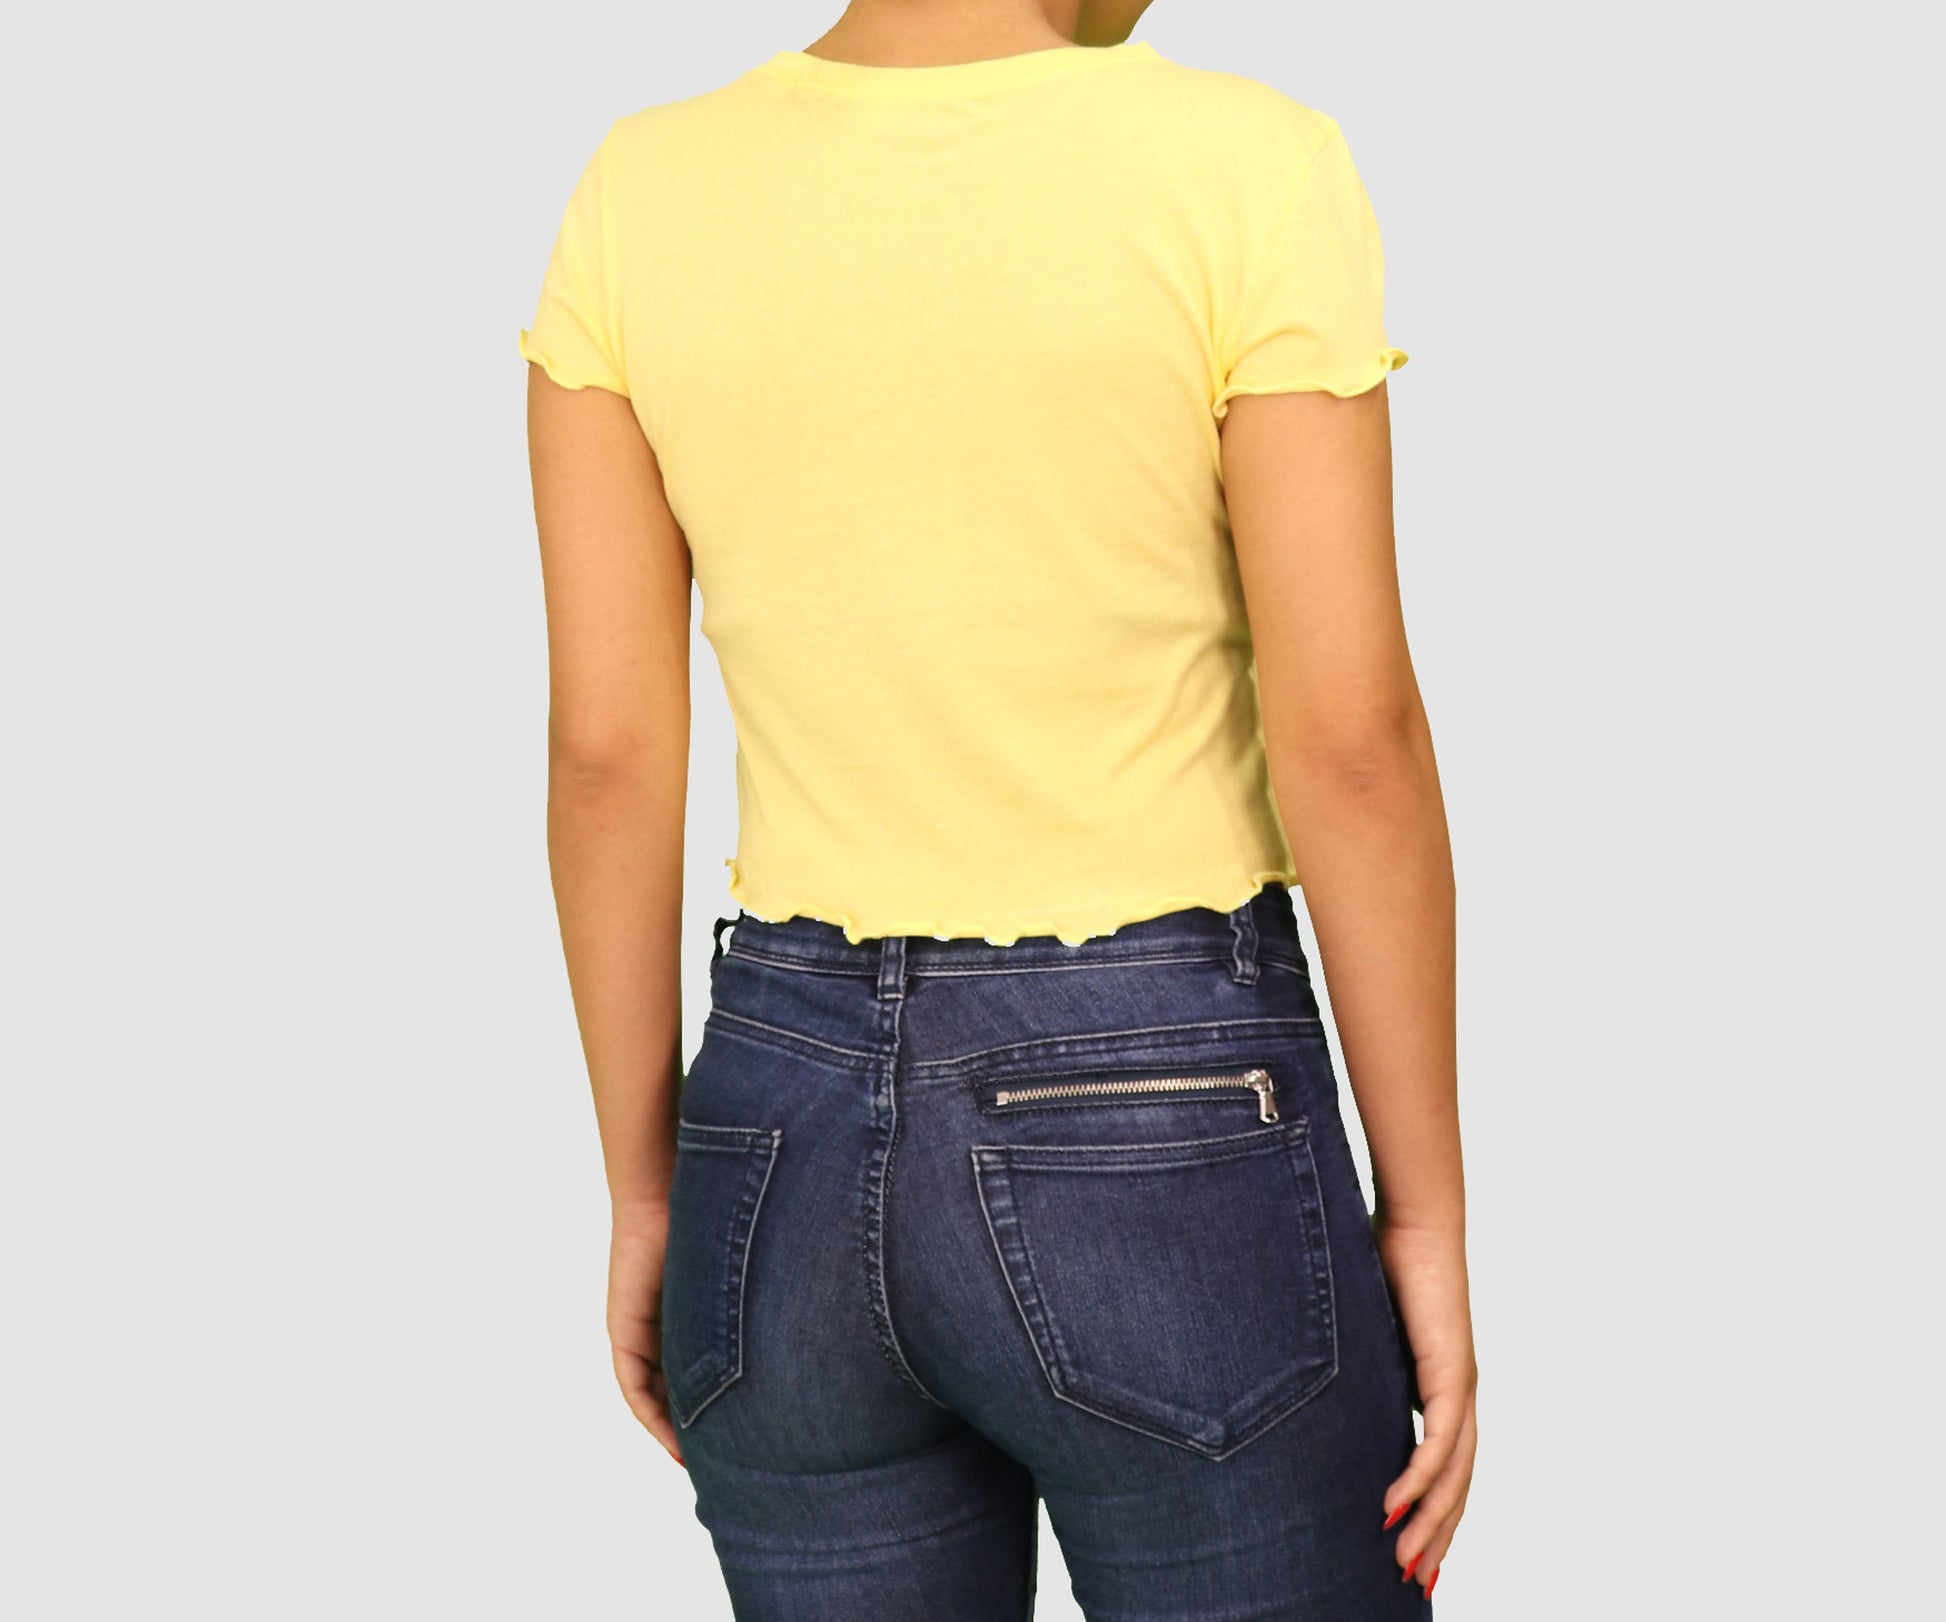 Basics By Pacsun Womens Tops X-Small / Medium Short Sleeve Top